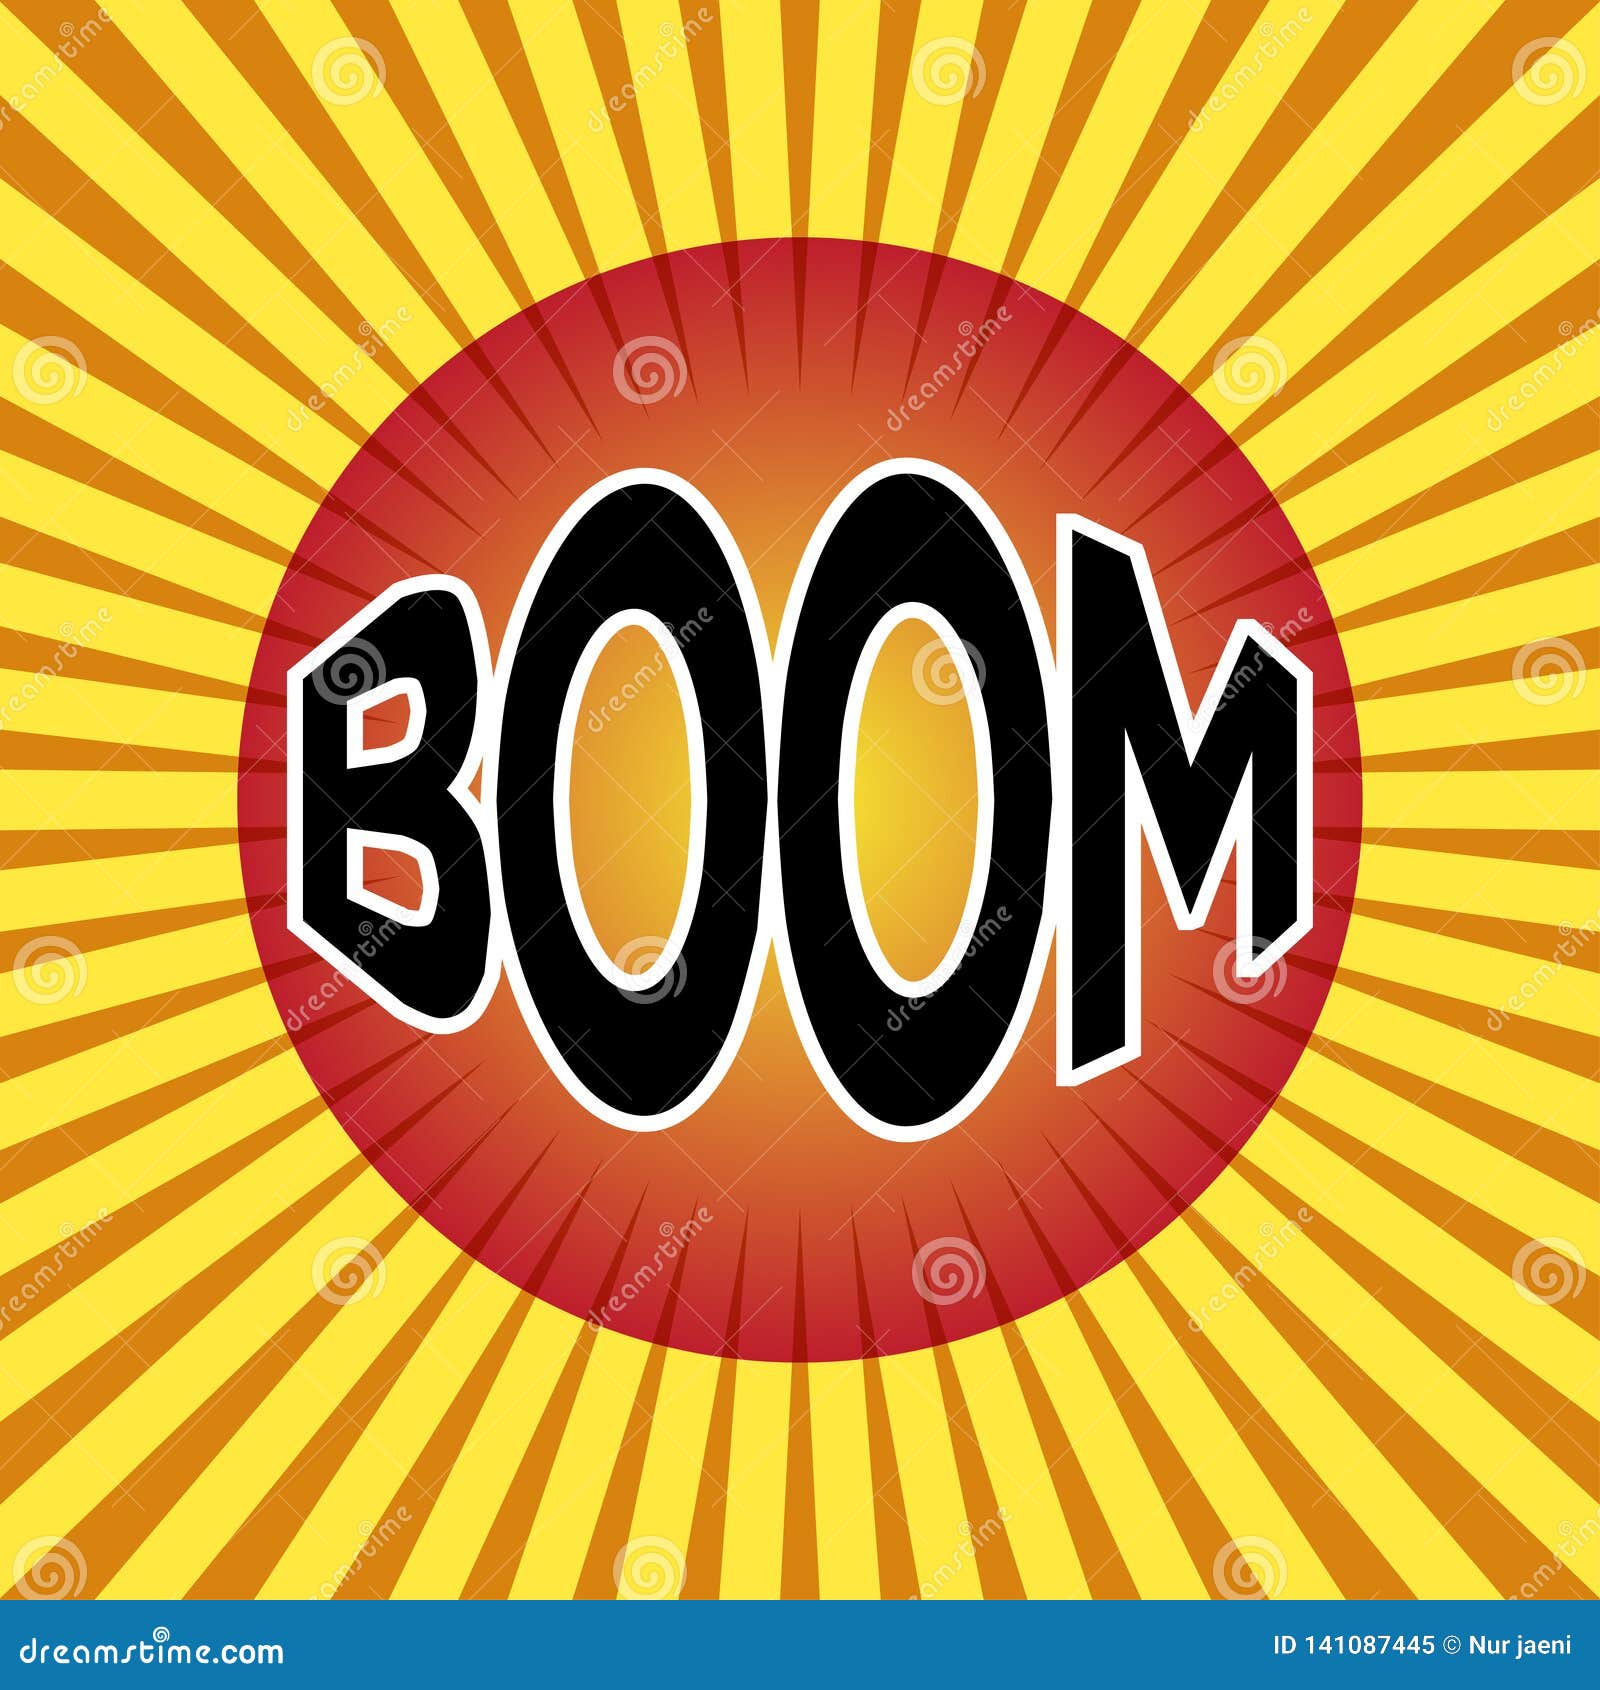 Boom Word Text  Effect Pop  Art  Design  Stock Illustration 